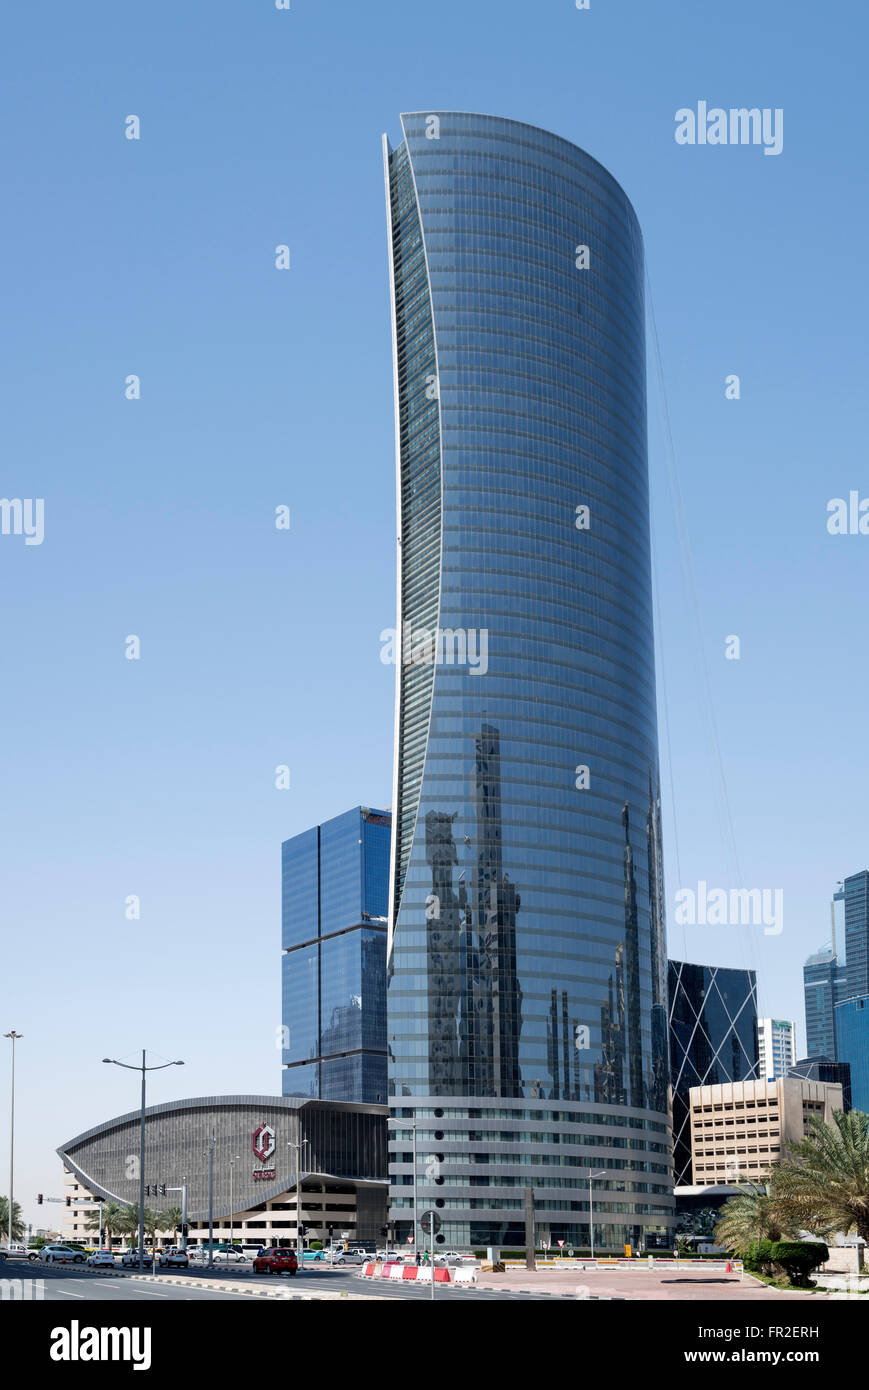 Office tower headquarters building of Qatar Gas company in Doha Qatar Stock Photo